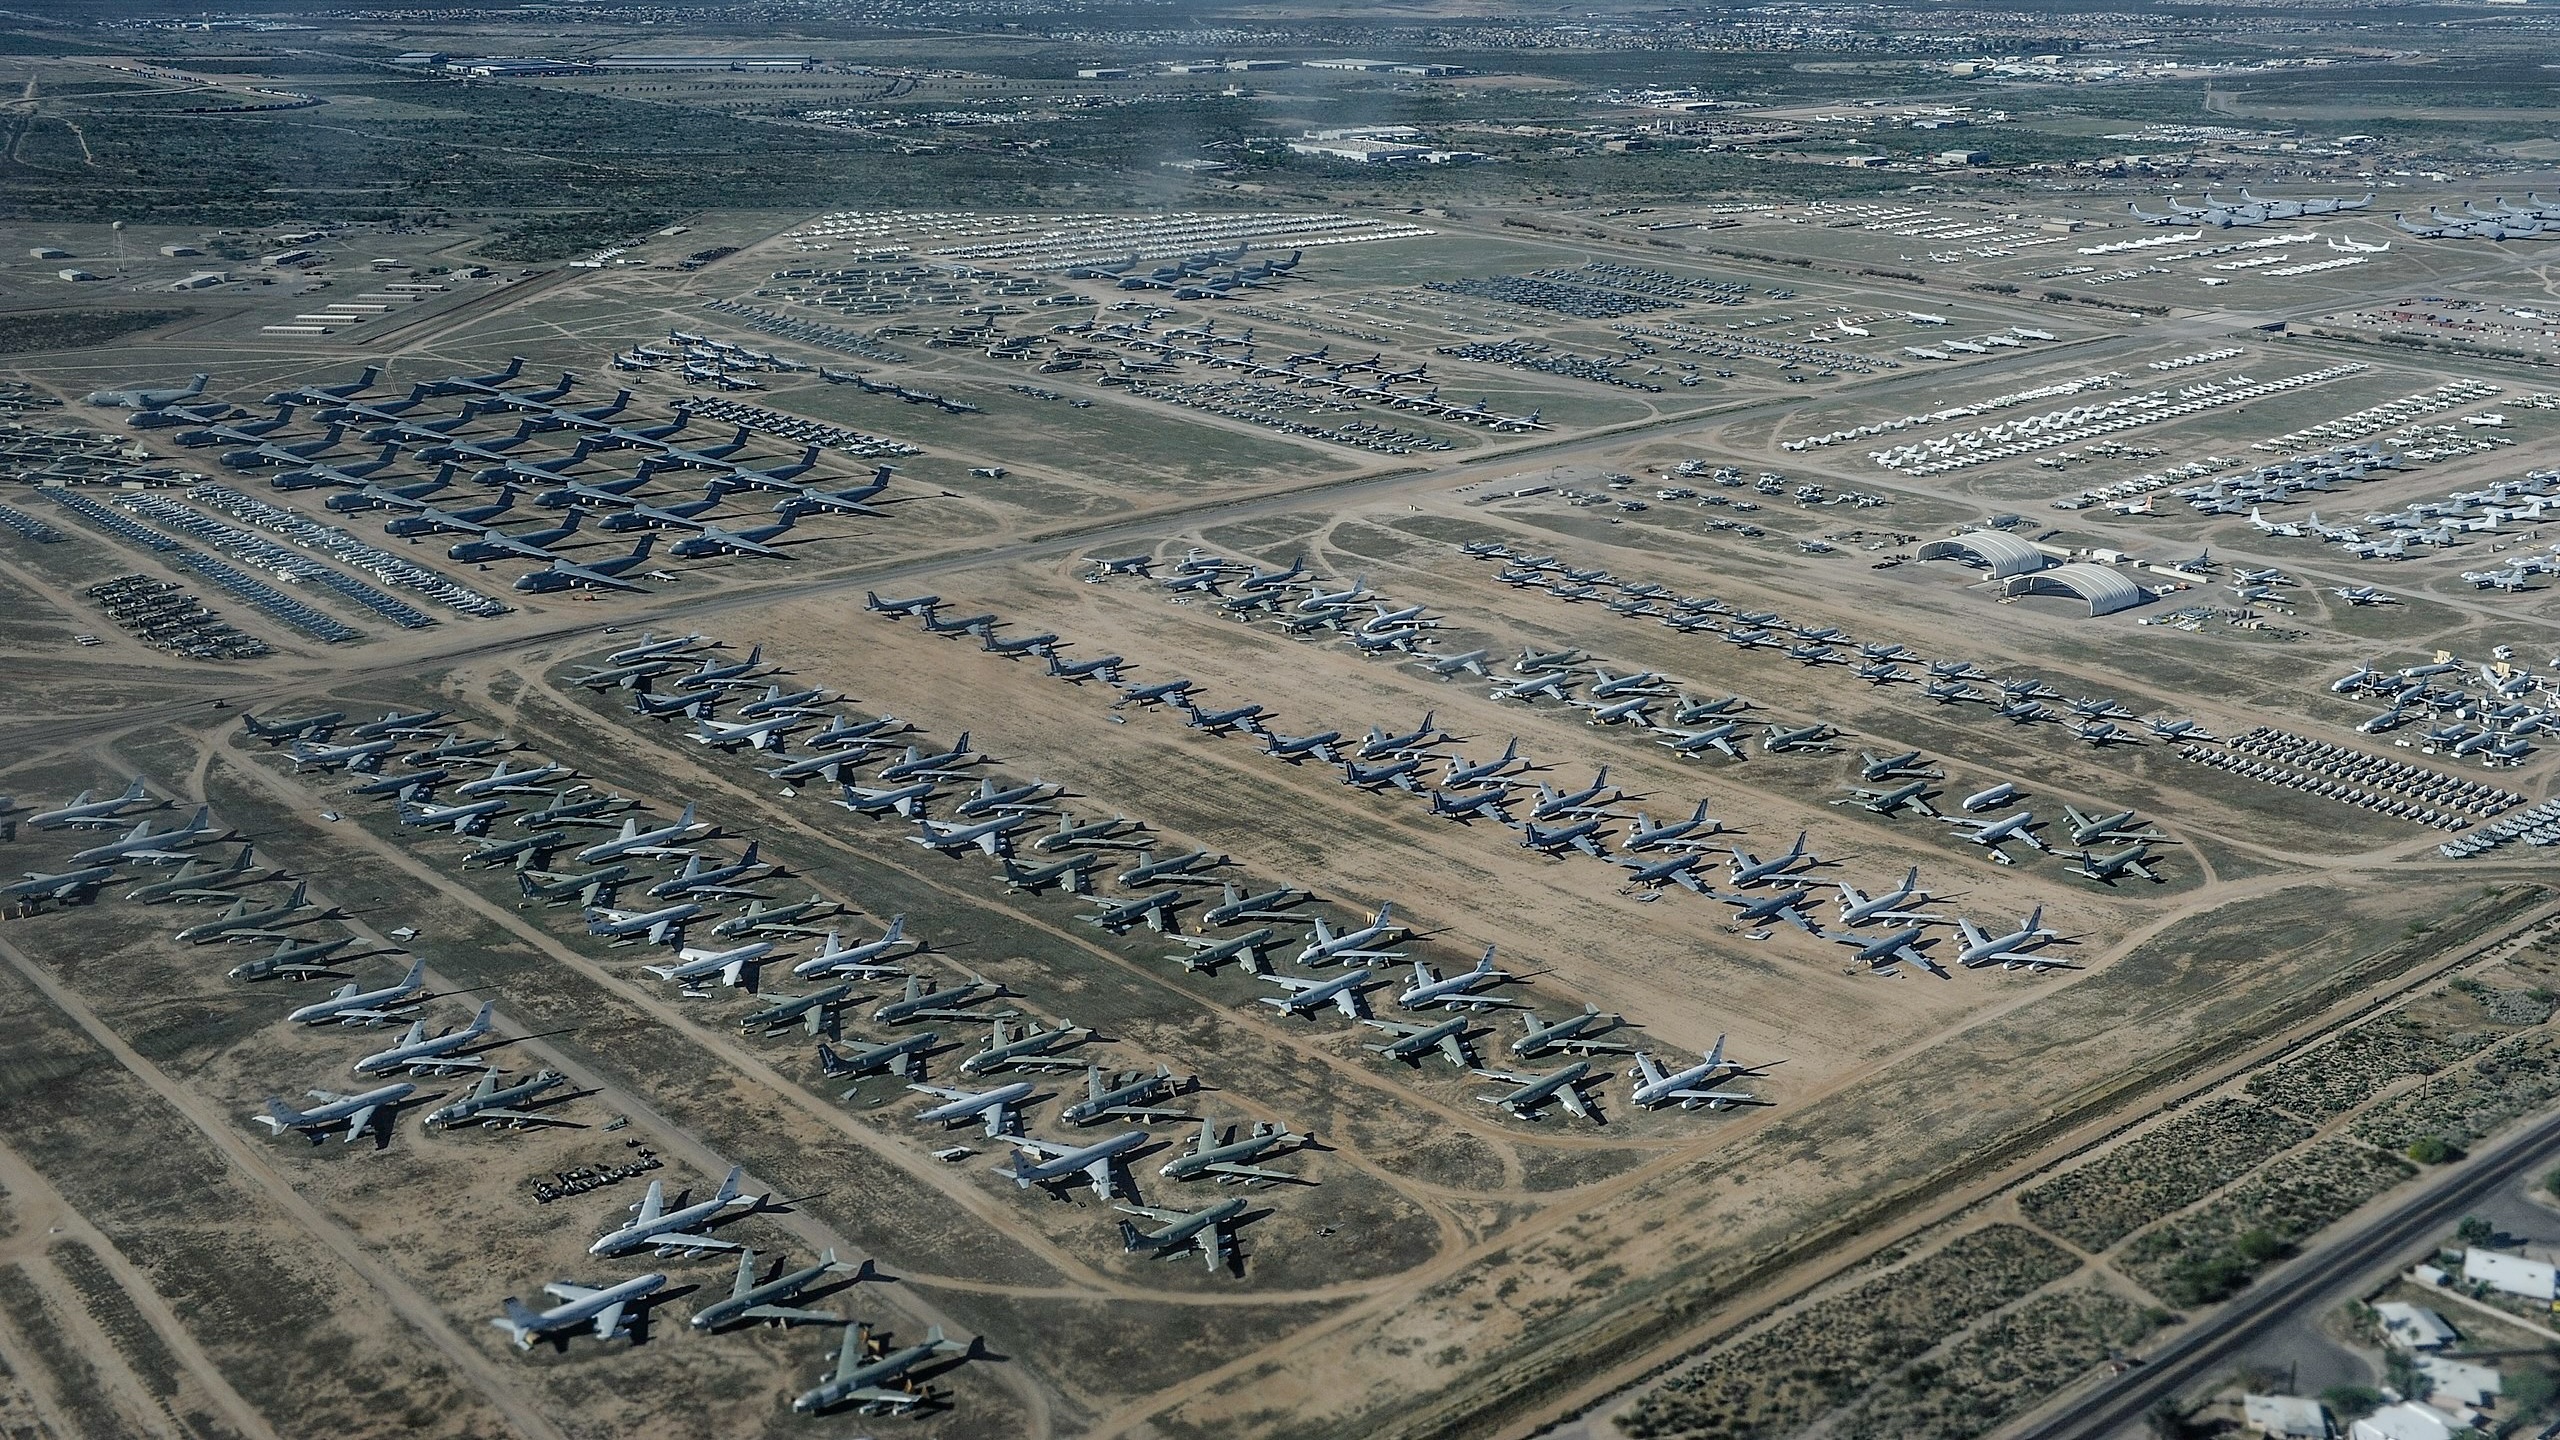 309th Aerospace Maintenance and Regeneration Group Davis-Monthan Air Force Base in Tucson, Arizona (USA)